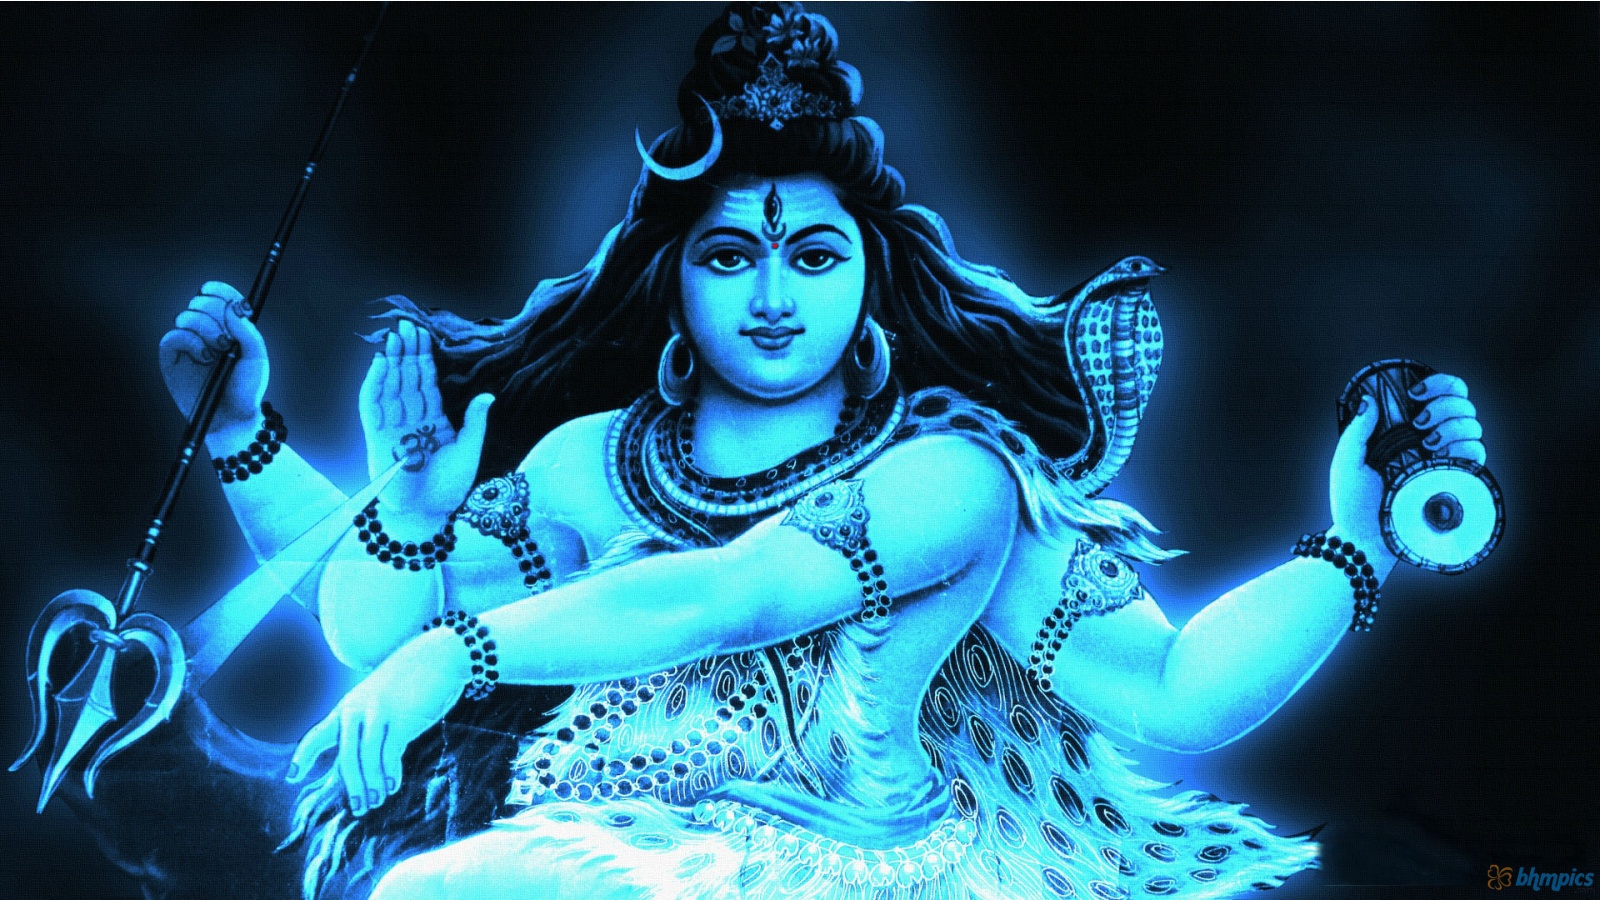 50+] Lord Shiva Wallpaper - WallpaperSafari